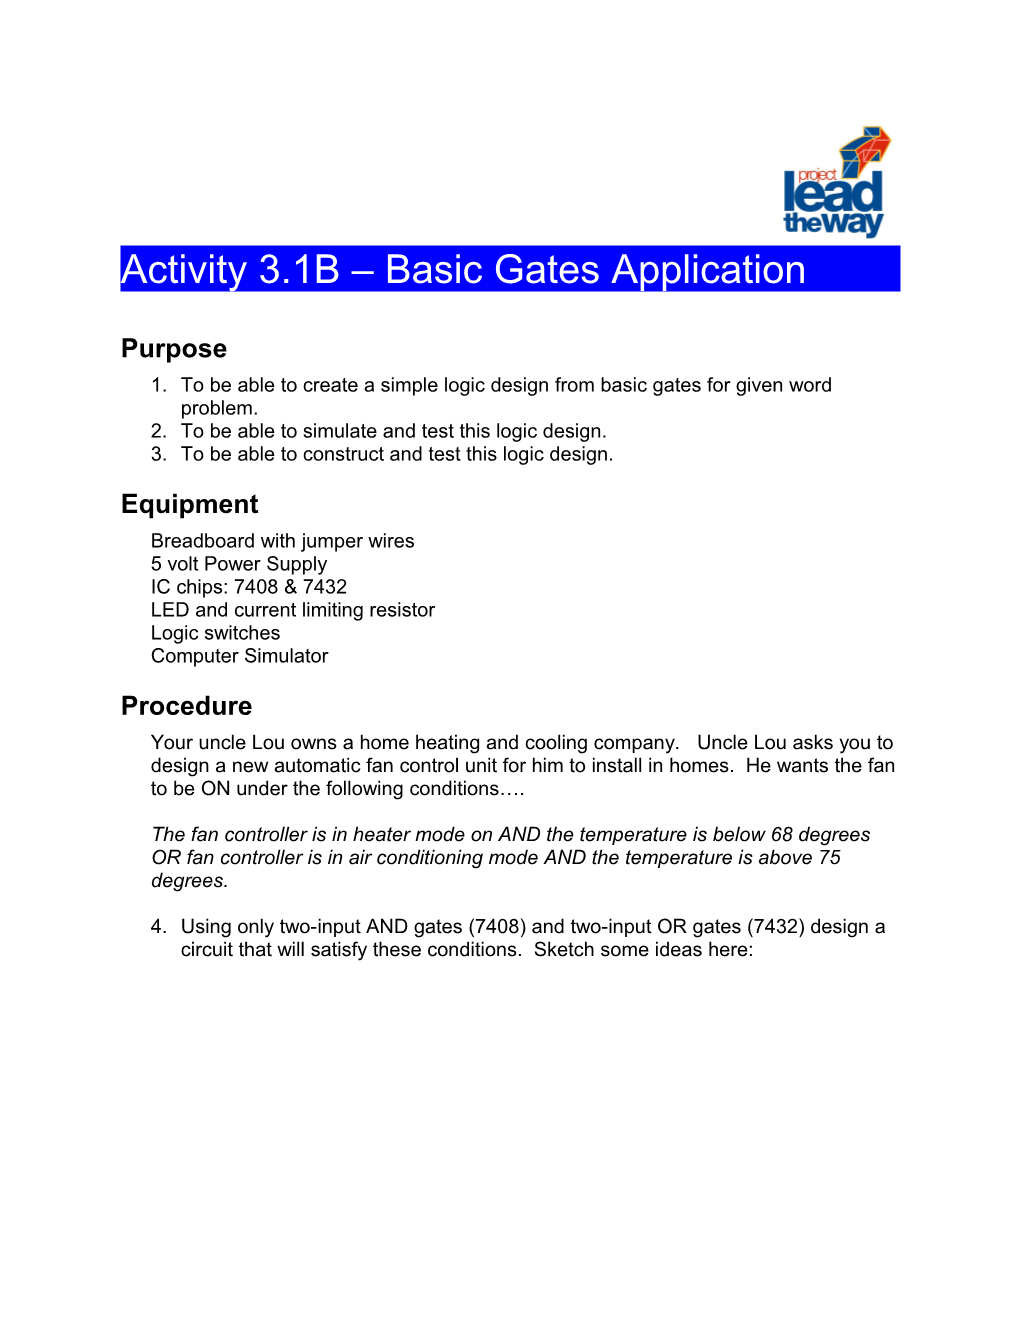 Activity 3.1B Basic Gates Application